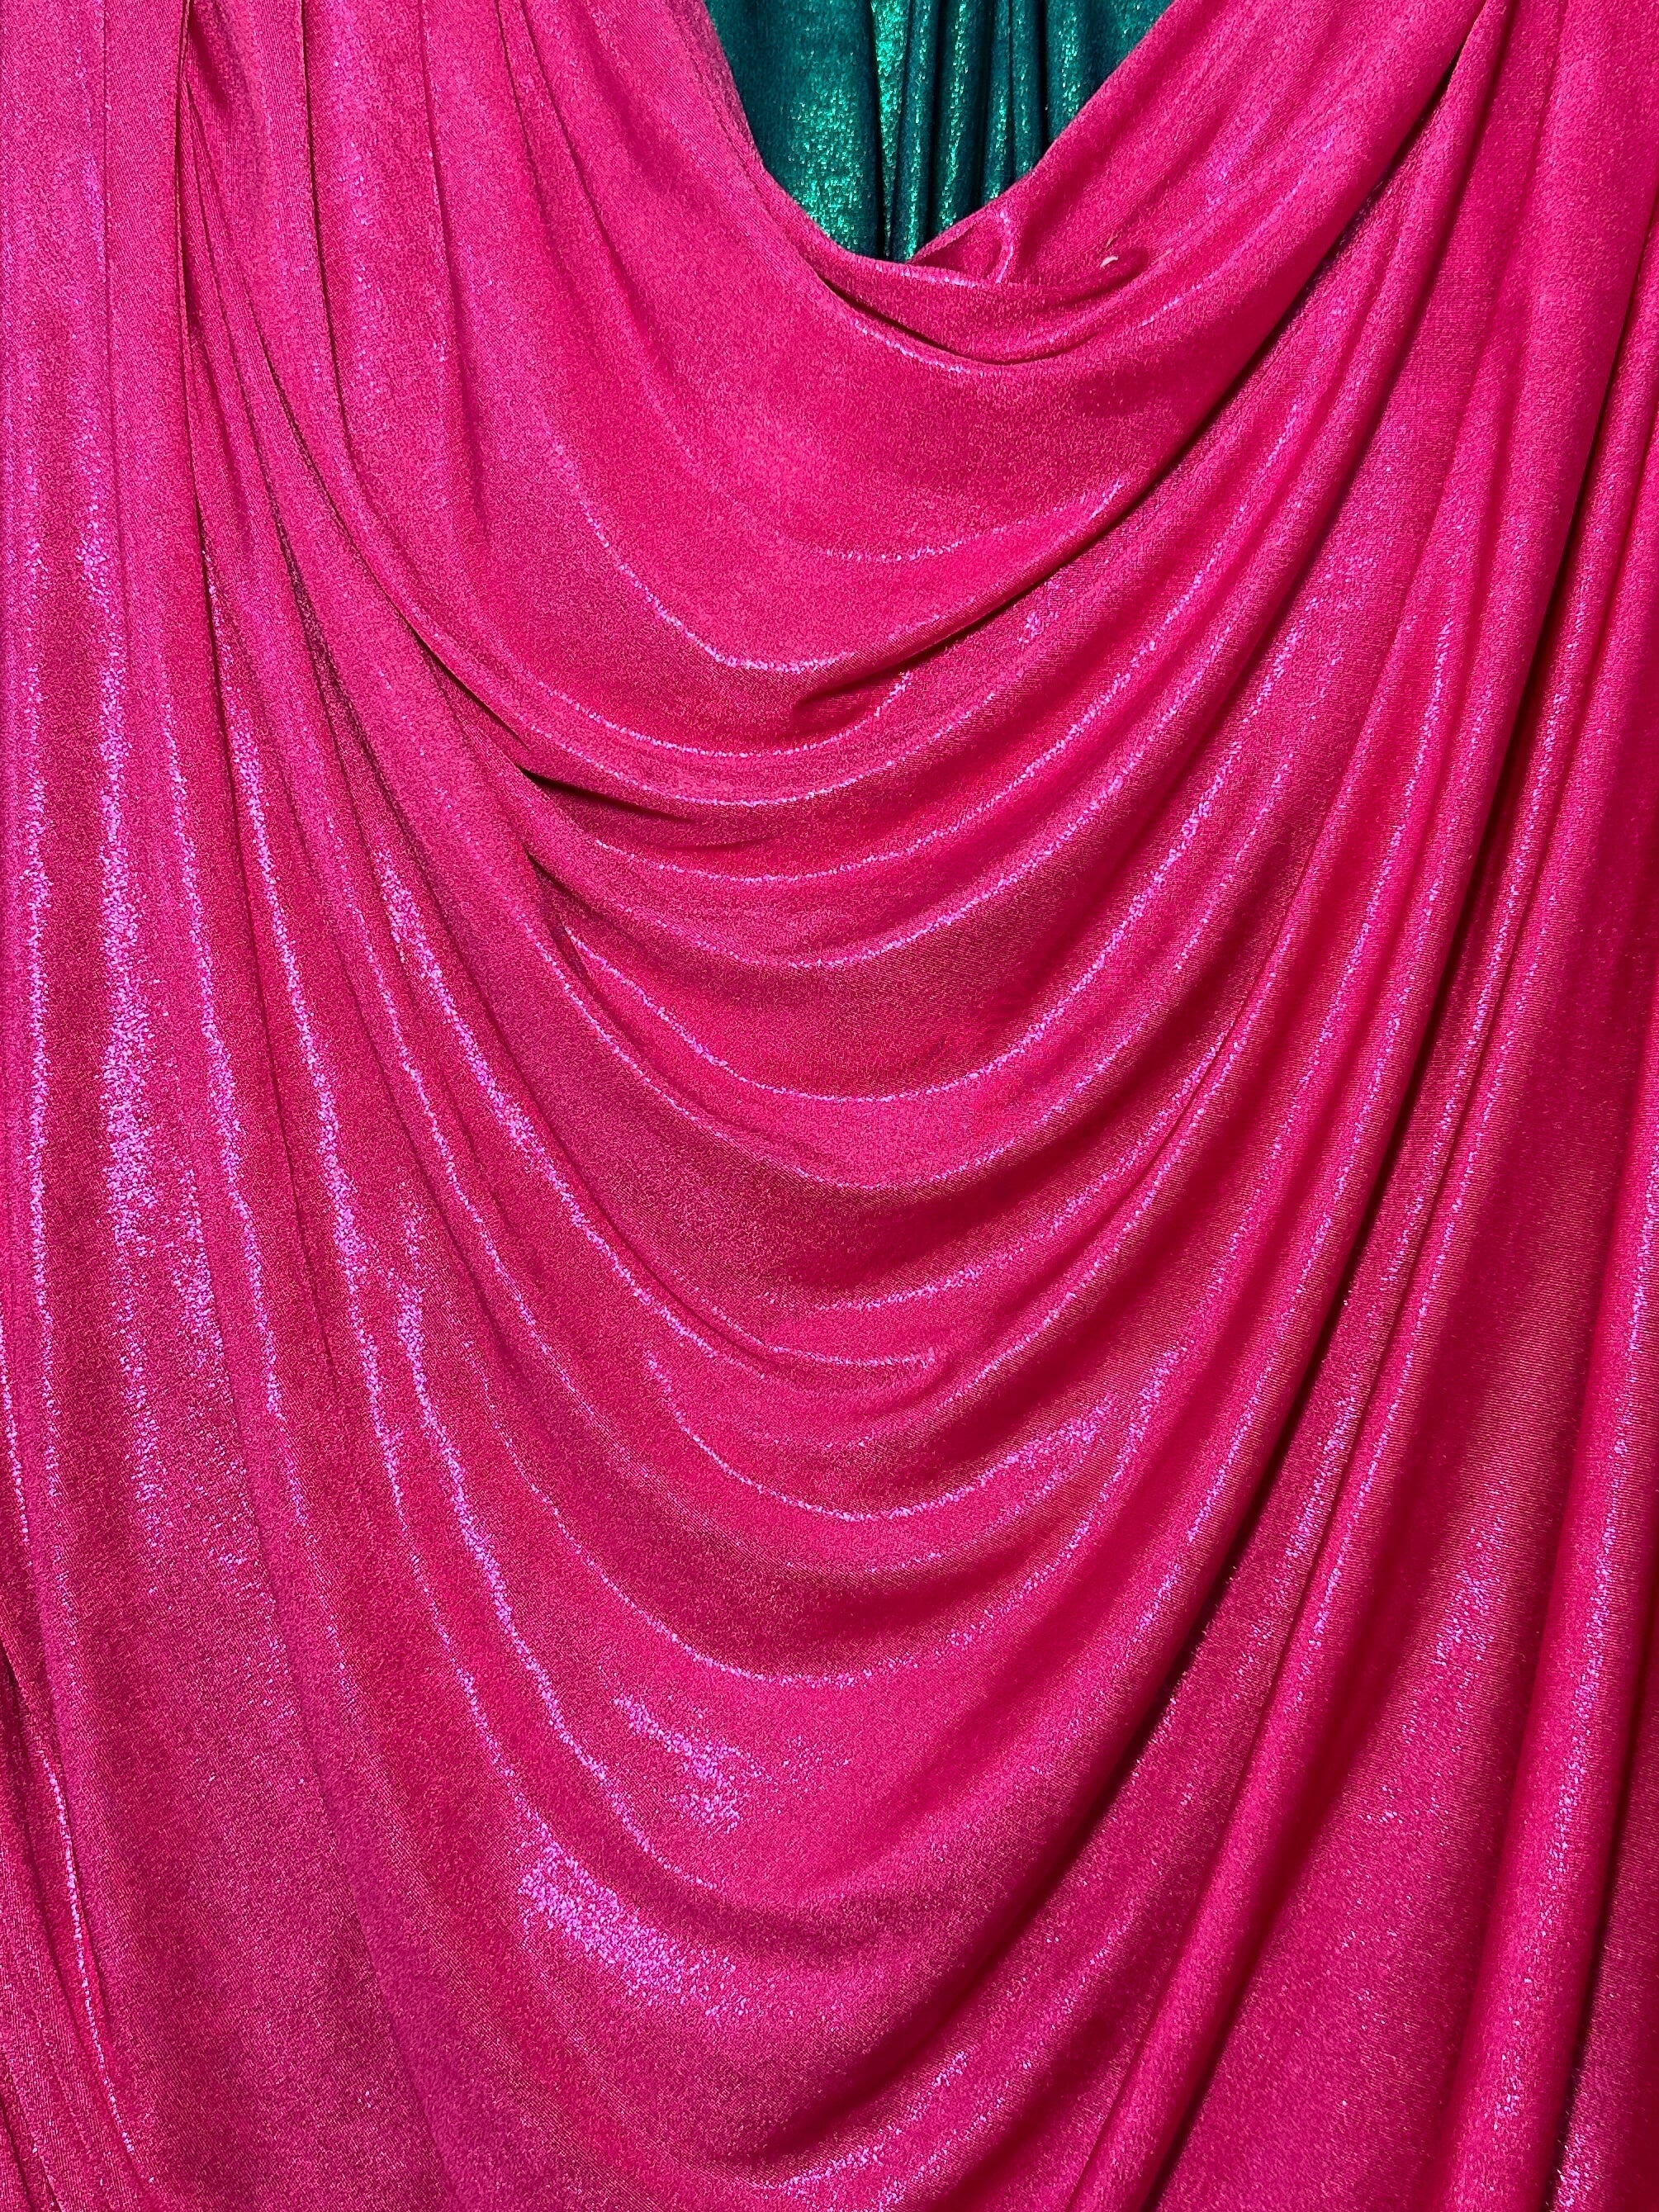 Hot Pink Slinky Foiled Jersey